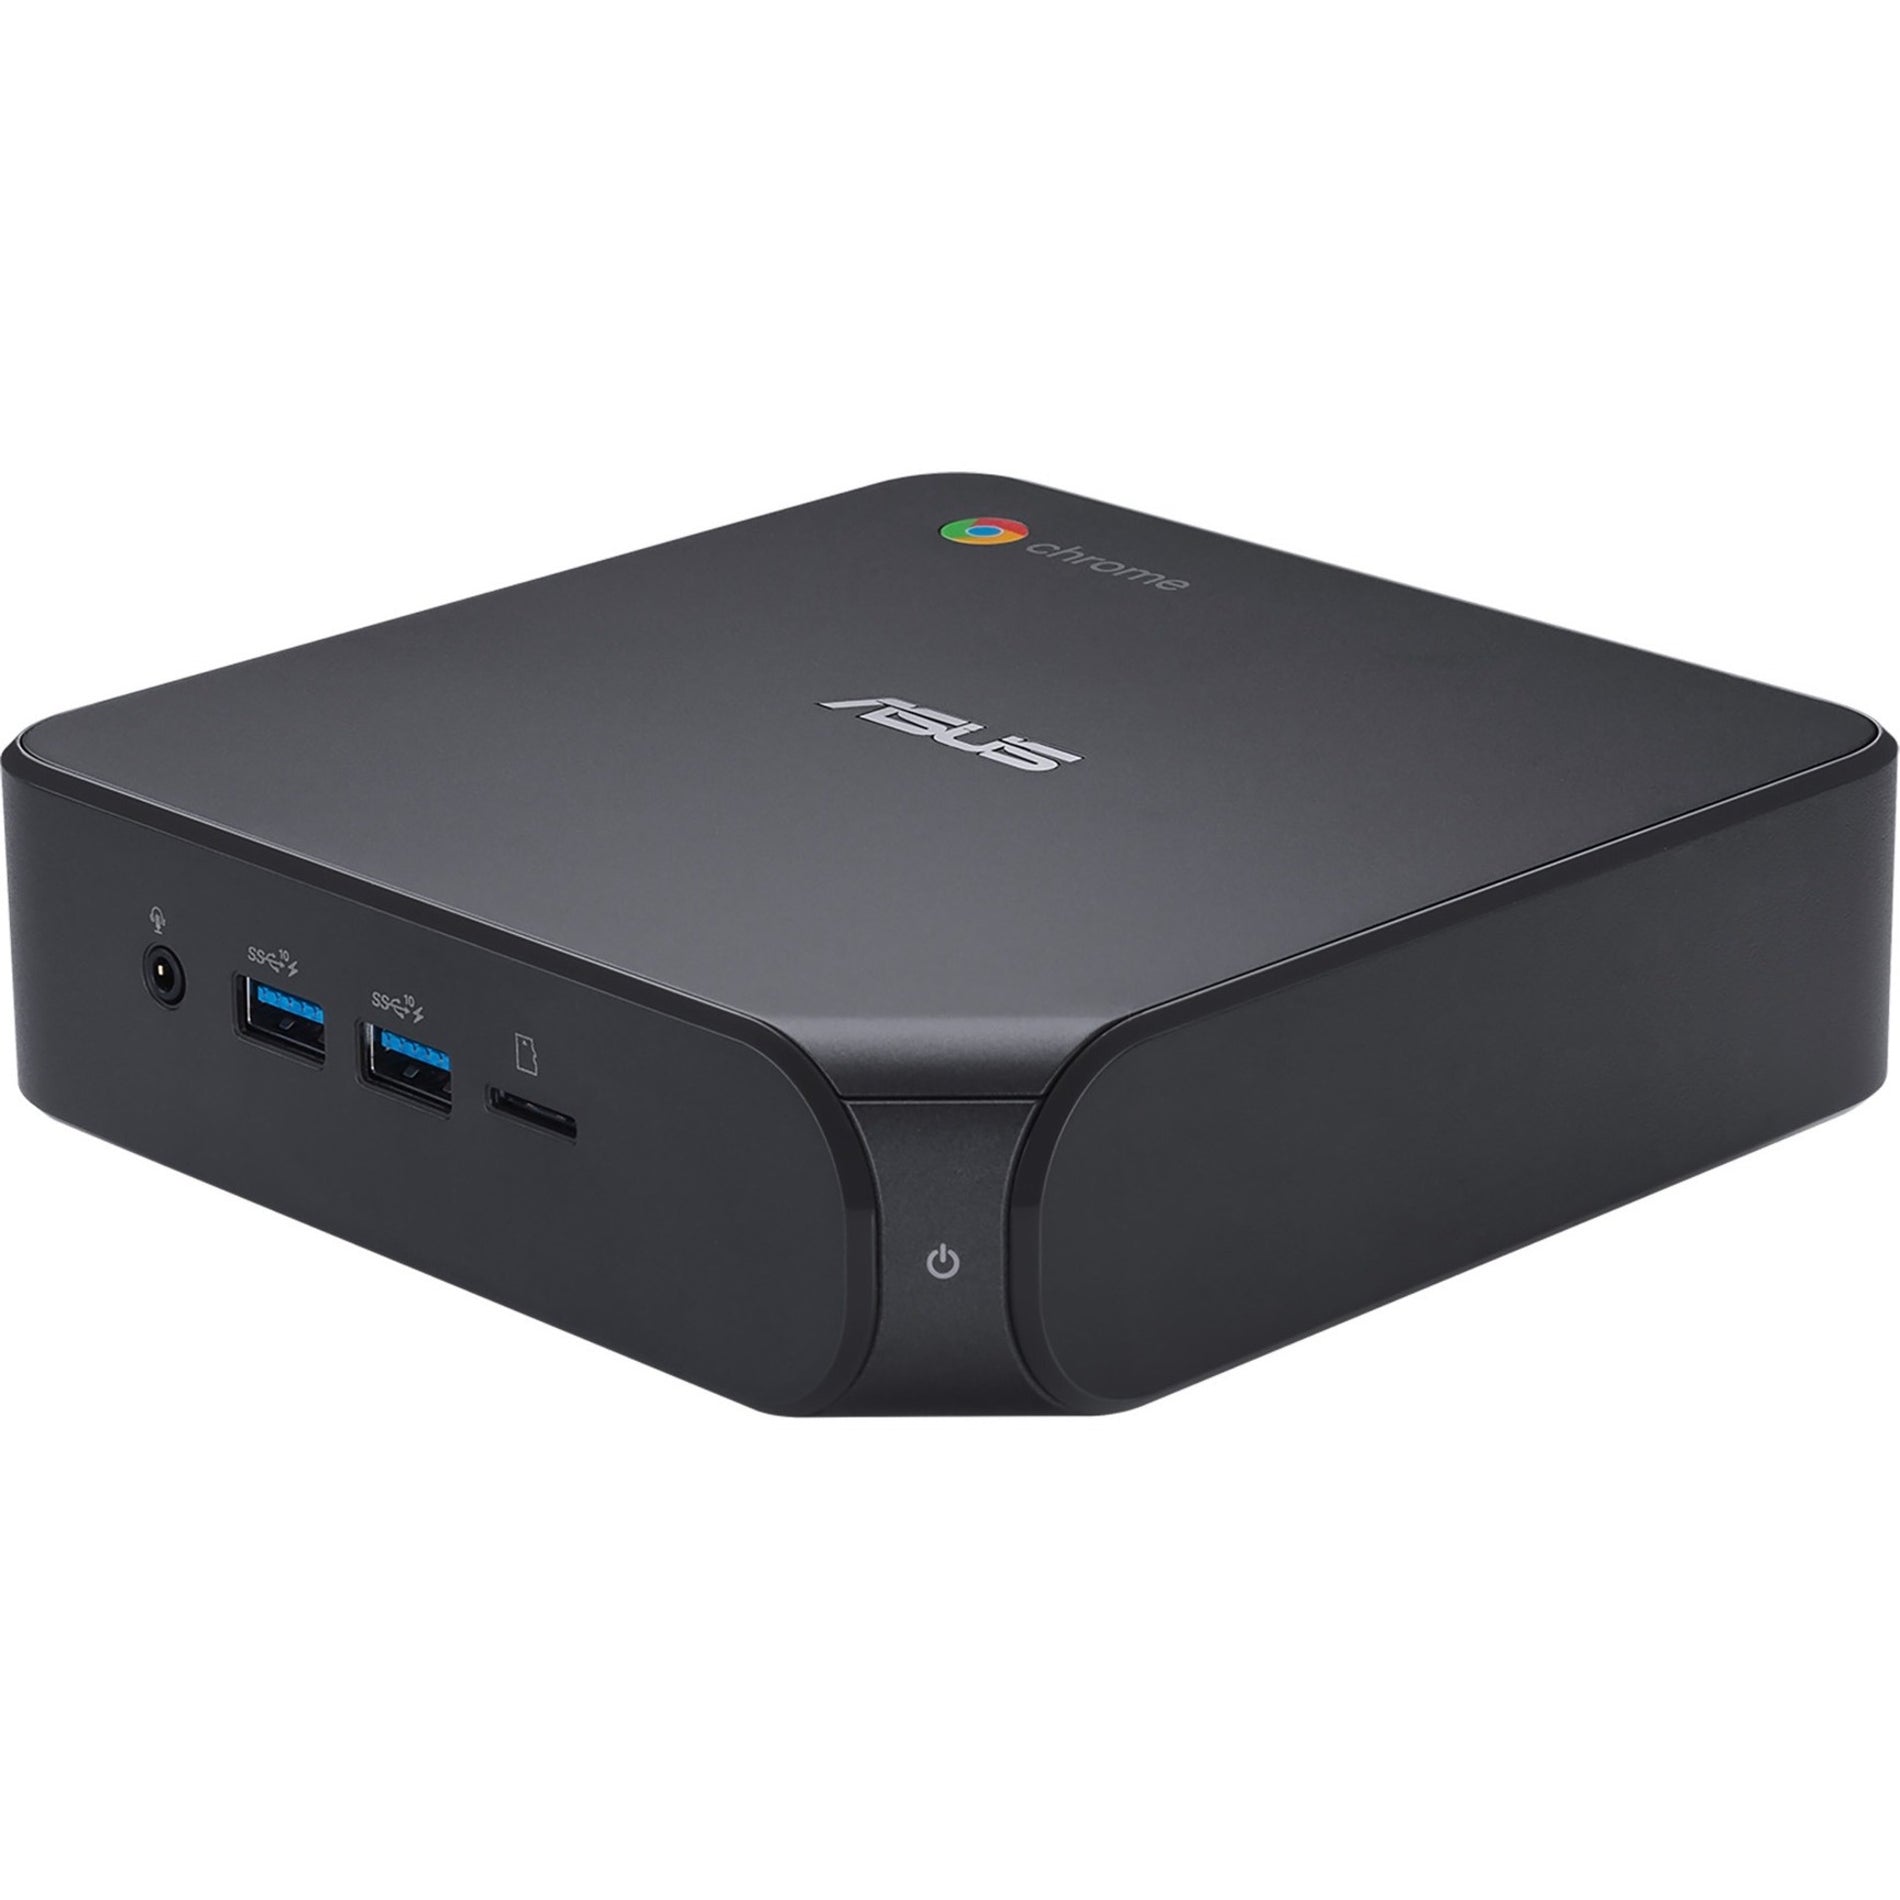 Asus CHROMEBOX4-GC17UN Chromebox, Celeron 5205U, 4GB RAM, 32GB Flash Memory, Chrome OS Retail